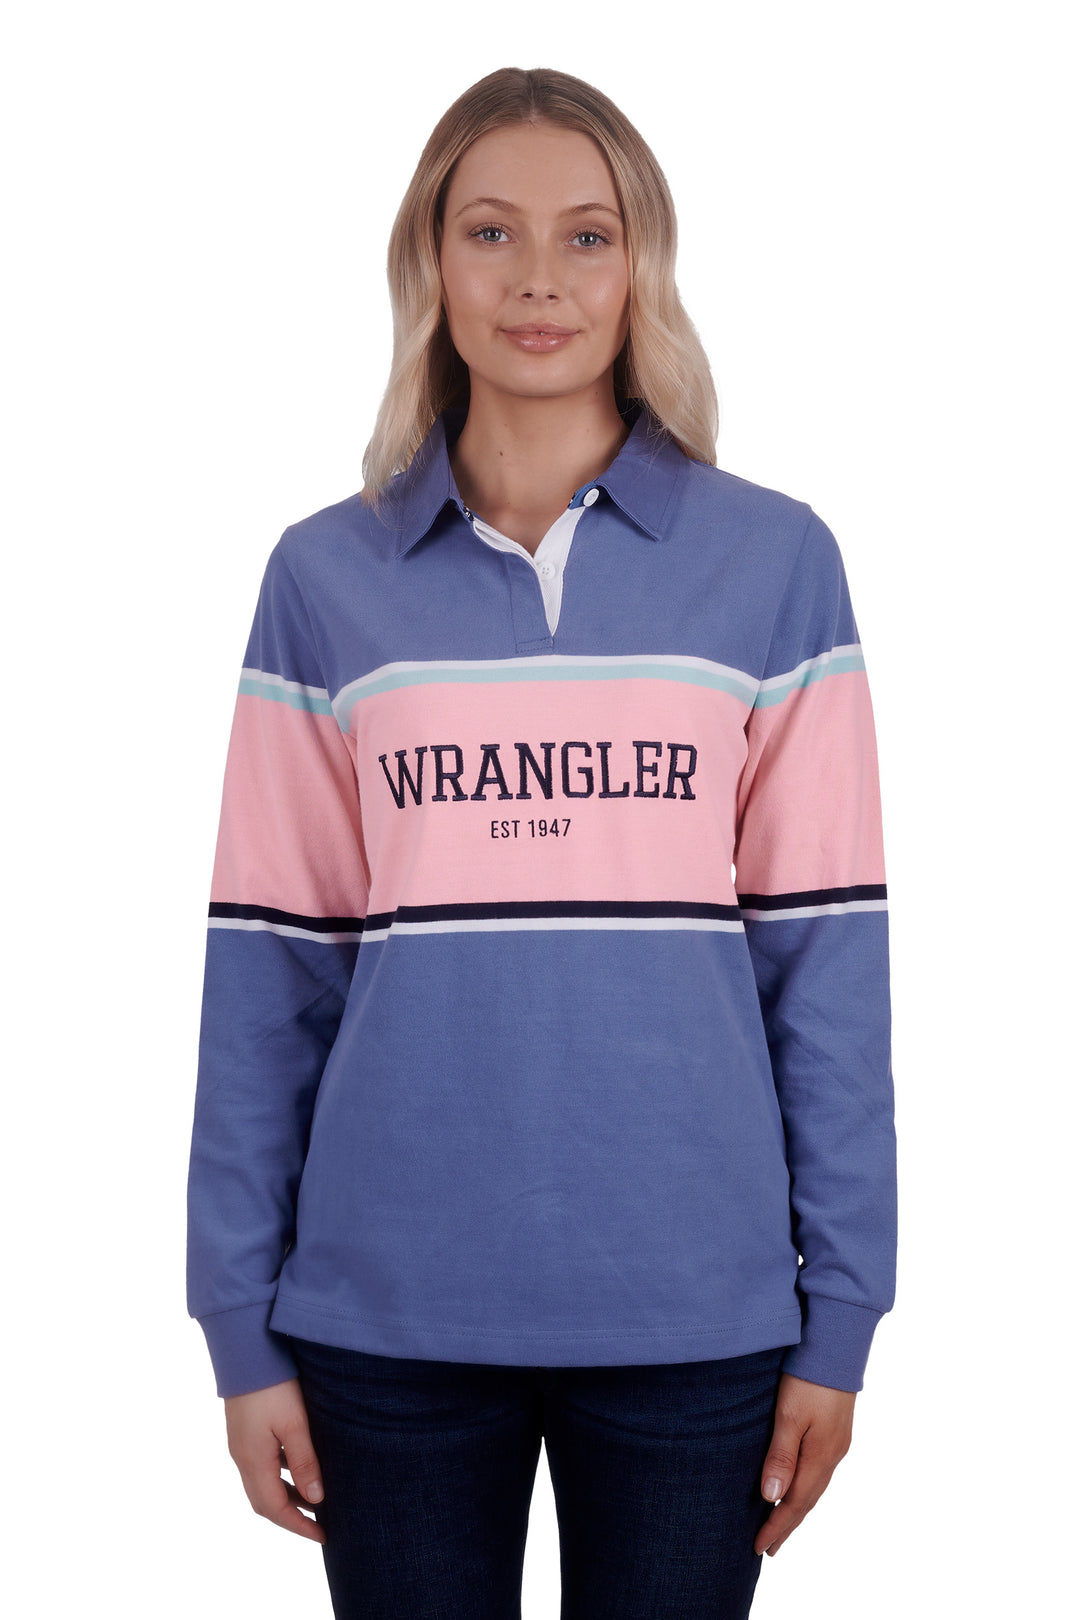 Wrangler - Womens Nicki Rugby Jersey